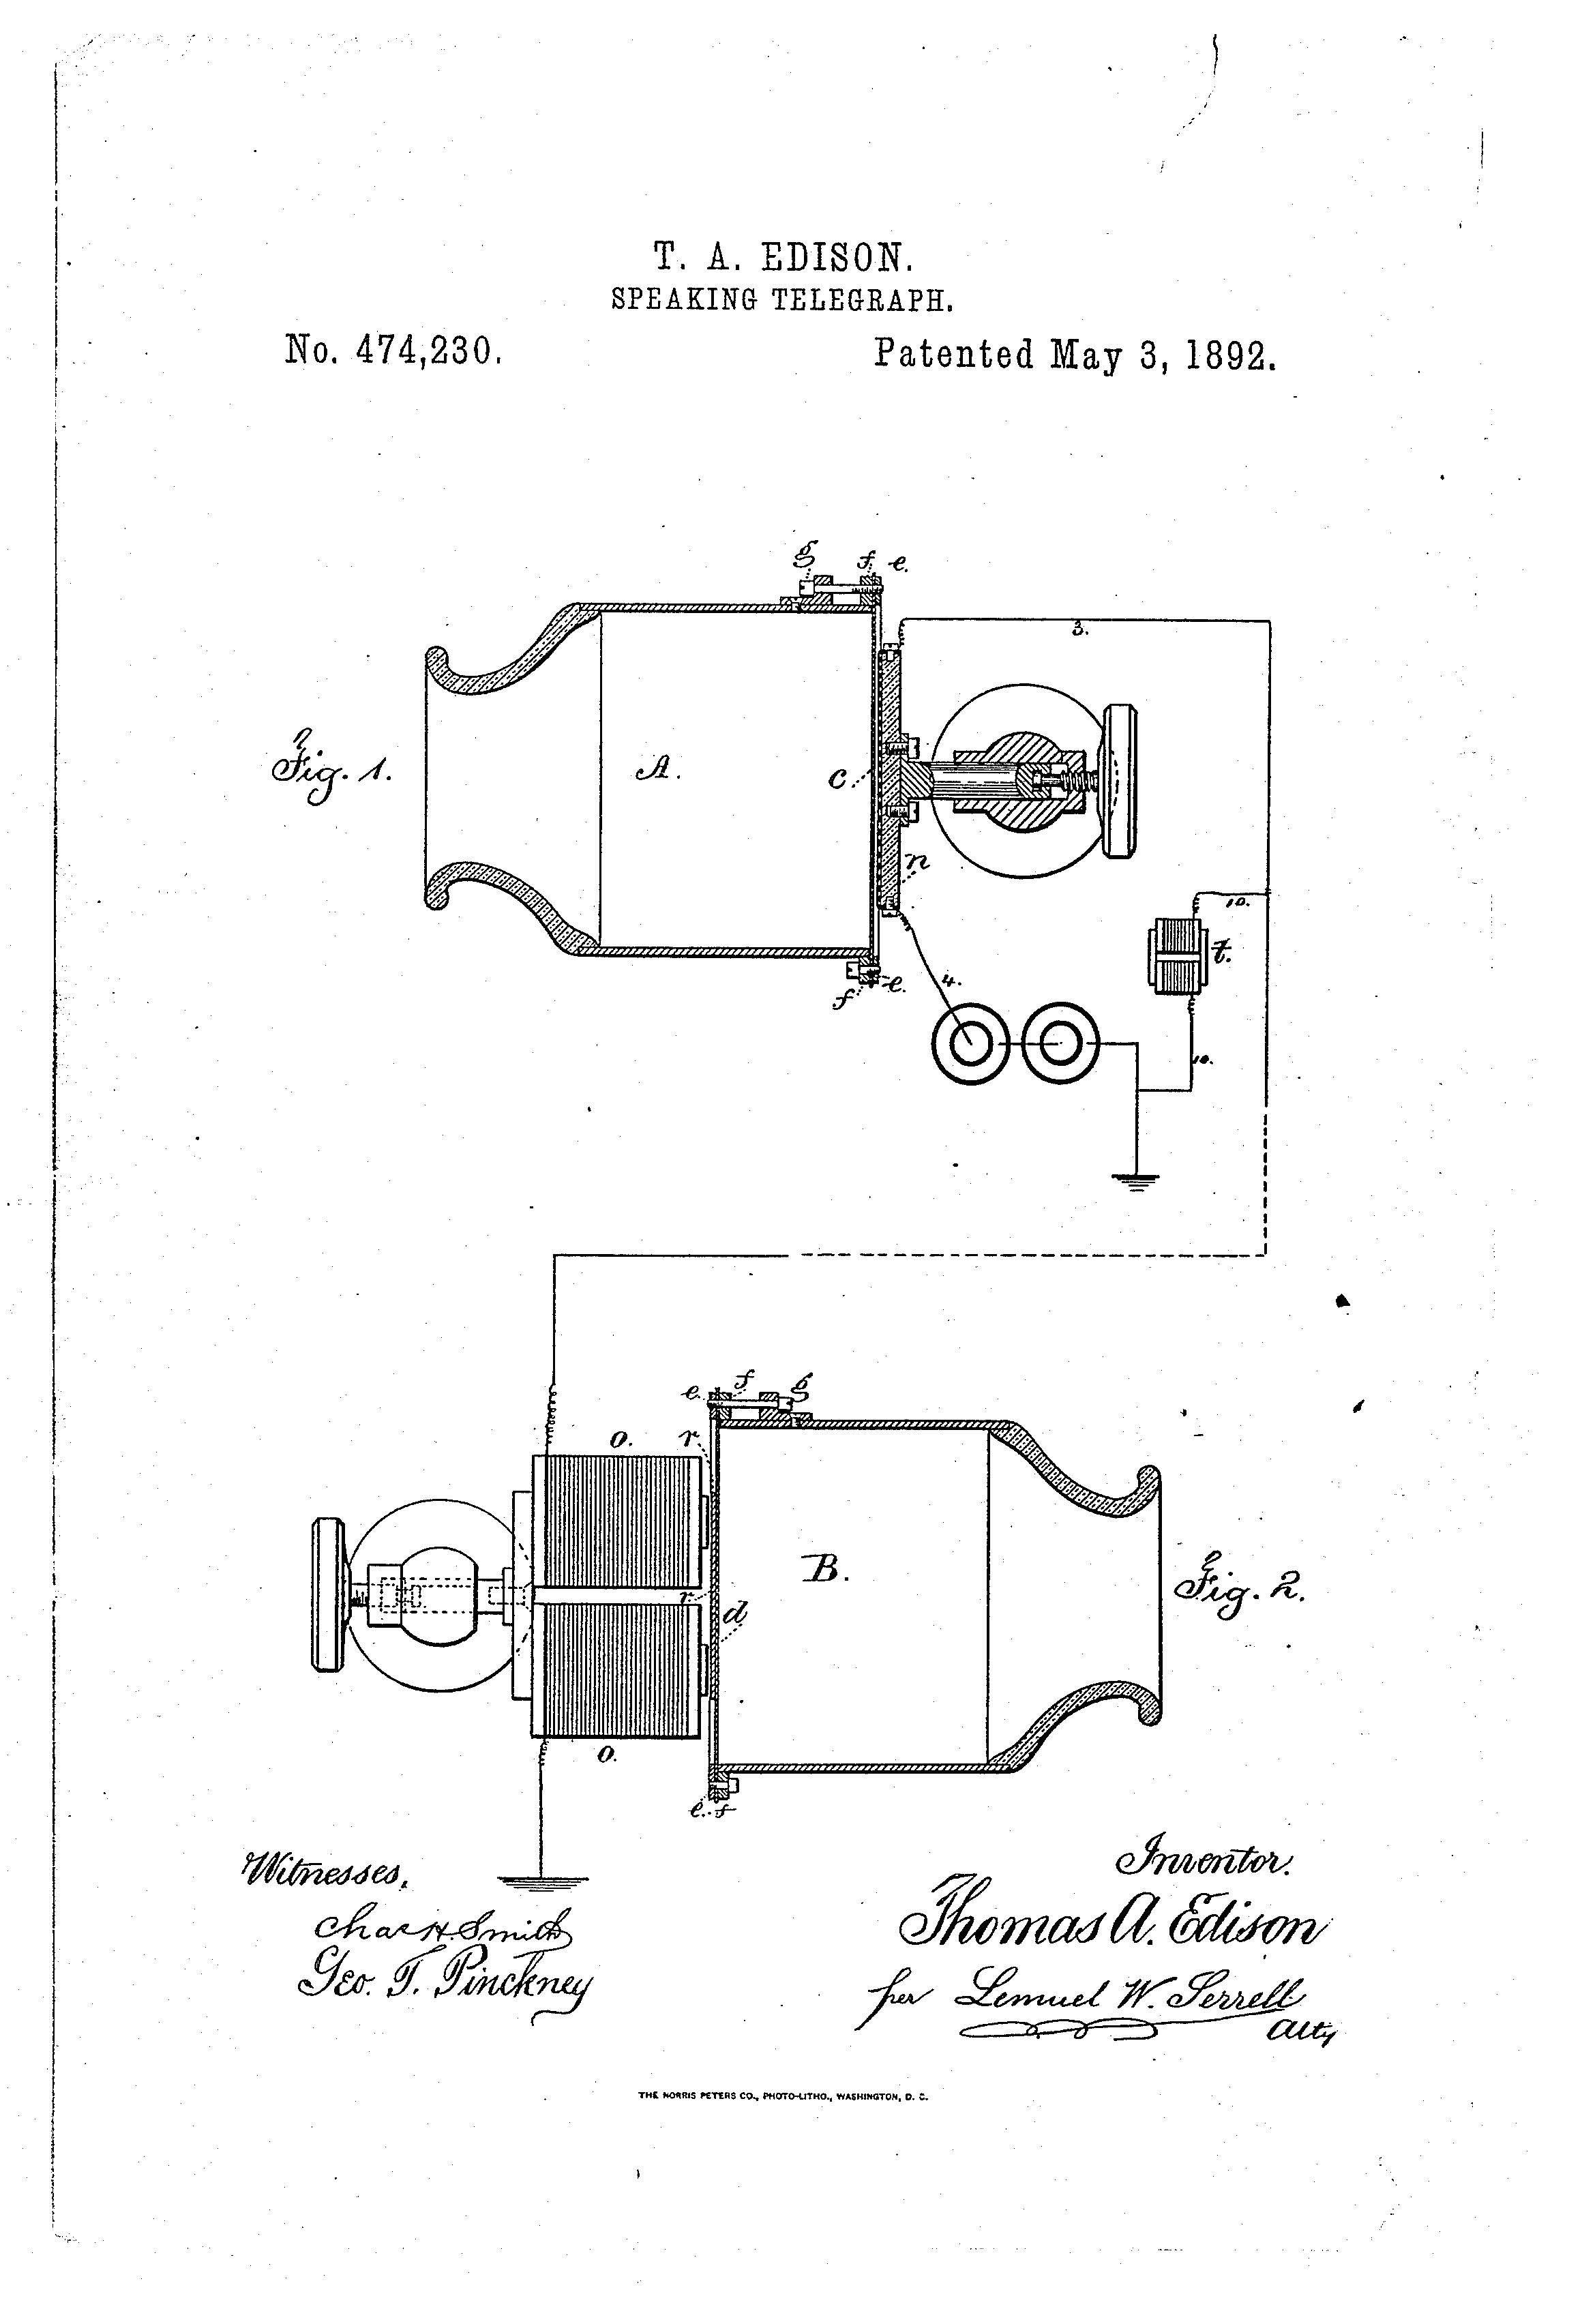 Speaking Telegraph patent by edison